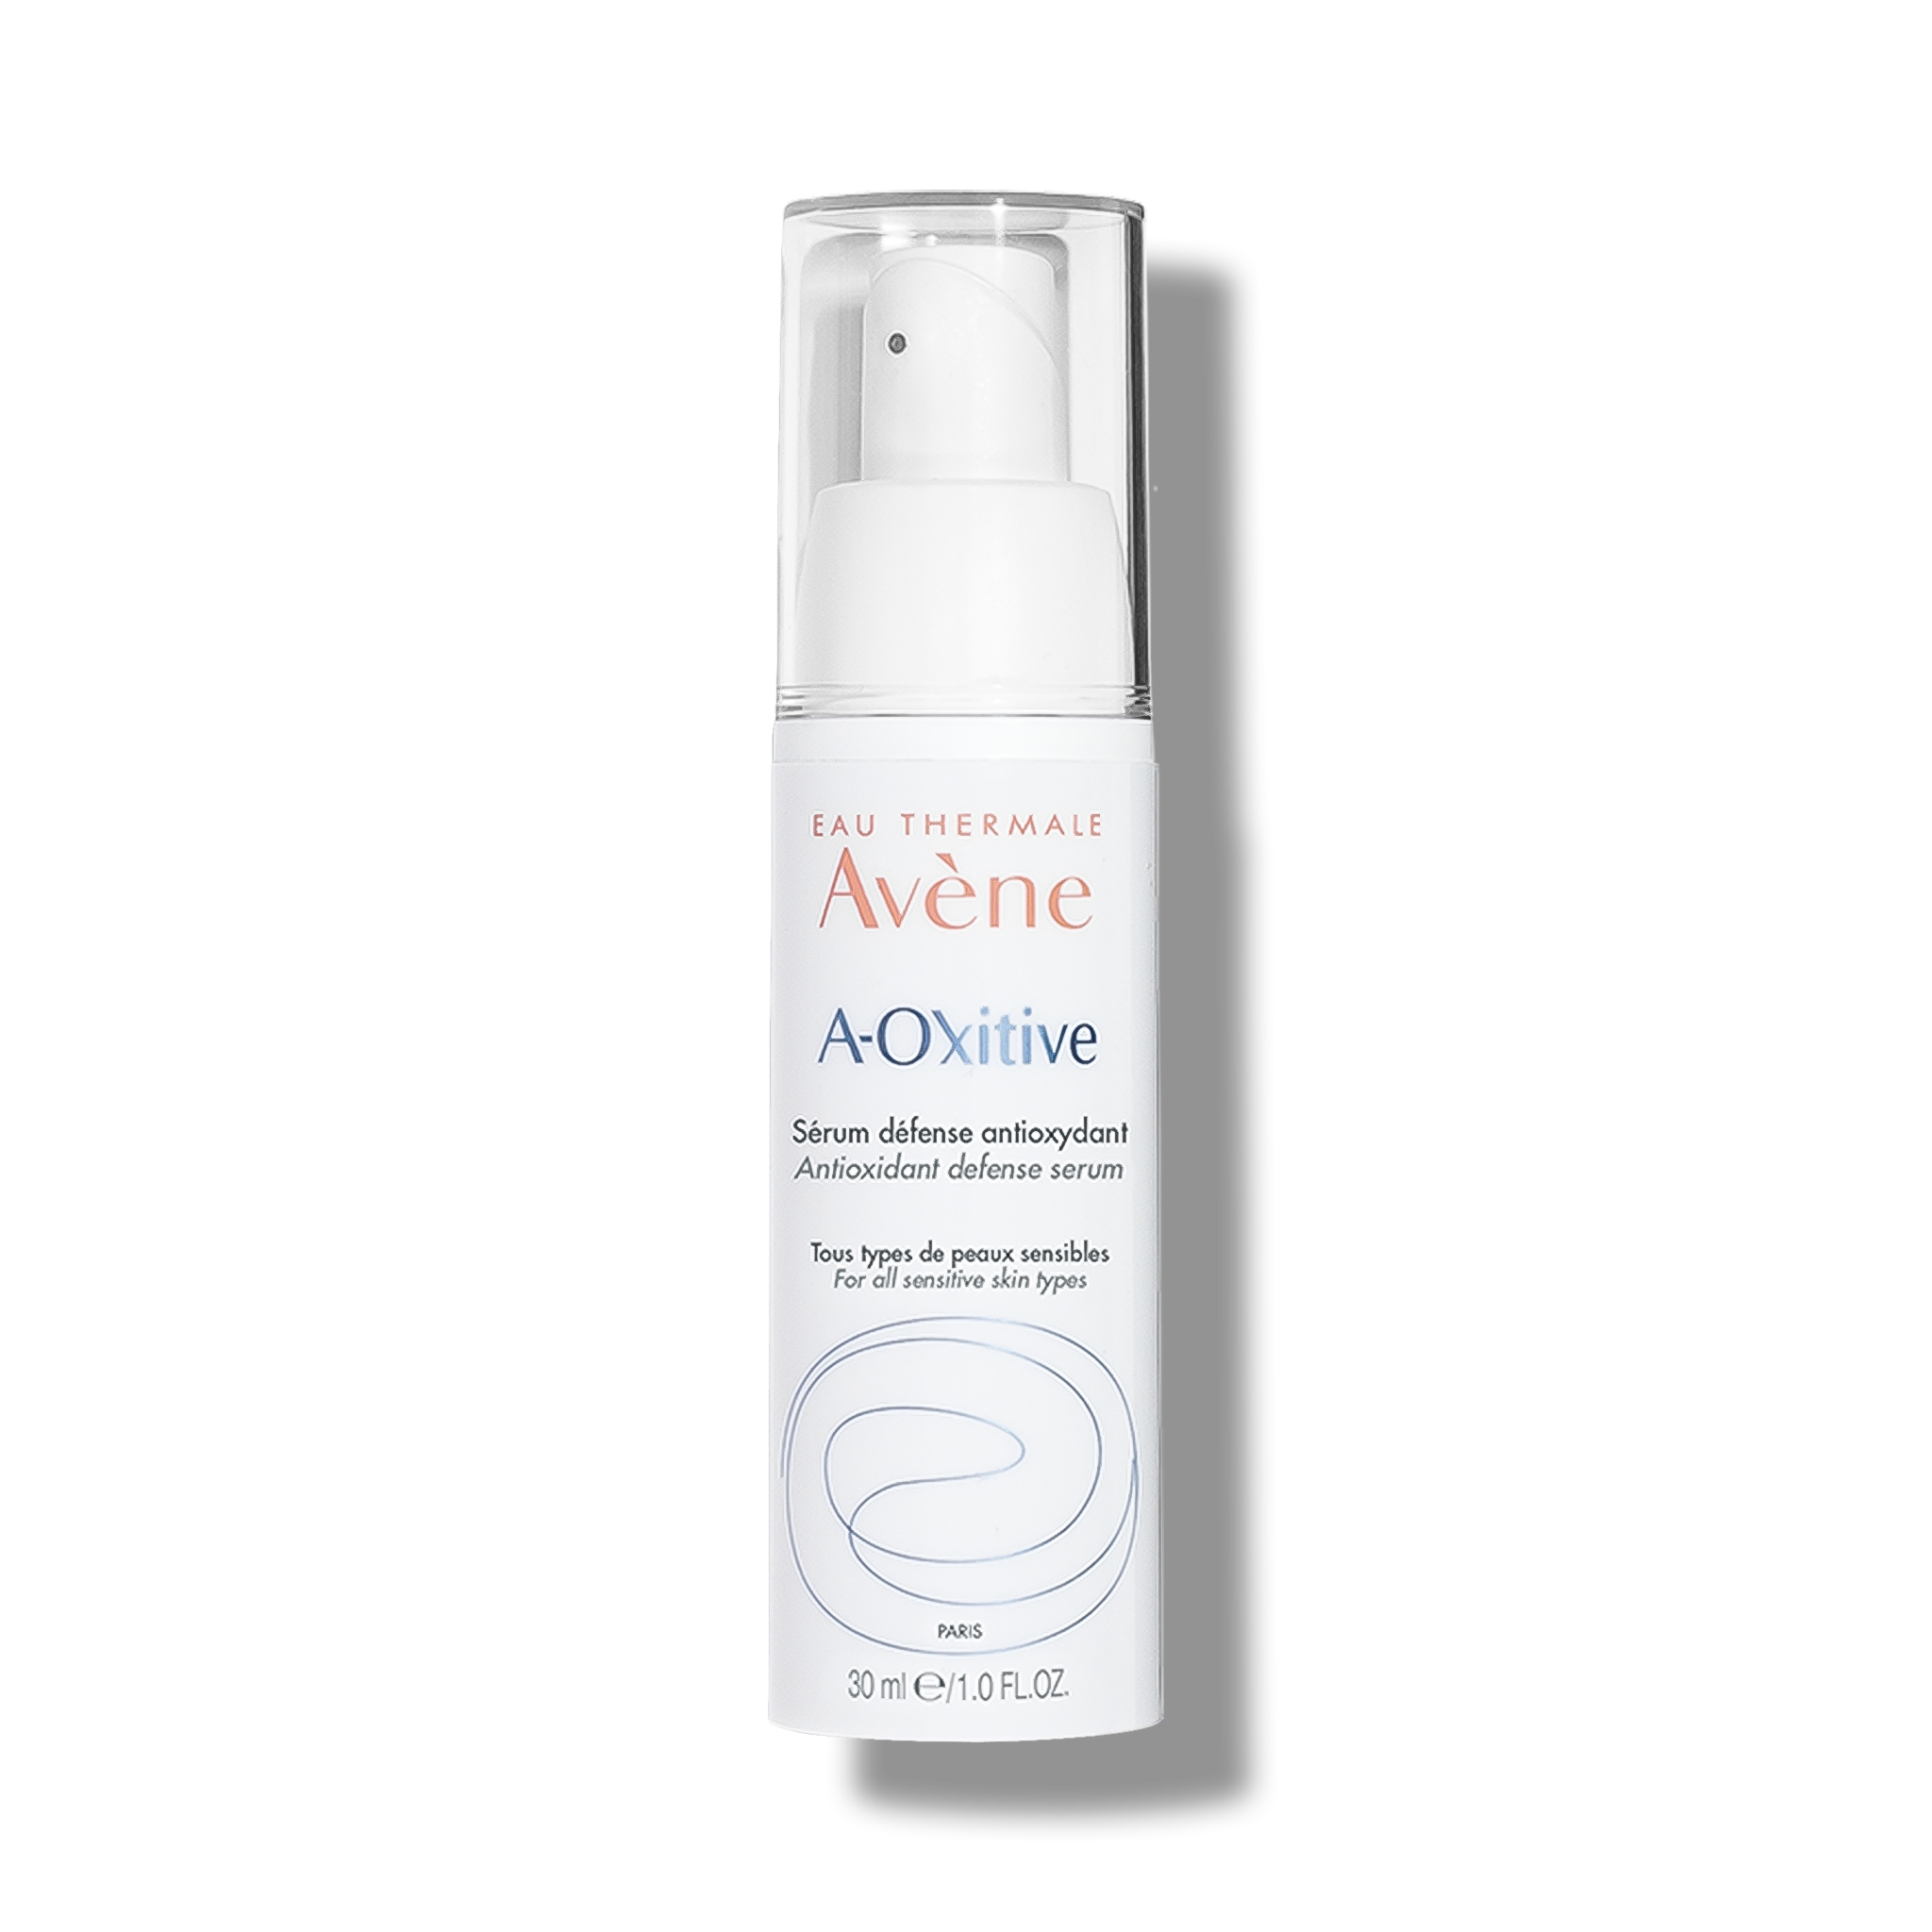 Avene A-OXitive Antioxidant Defense Serum